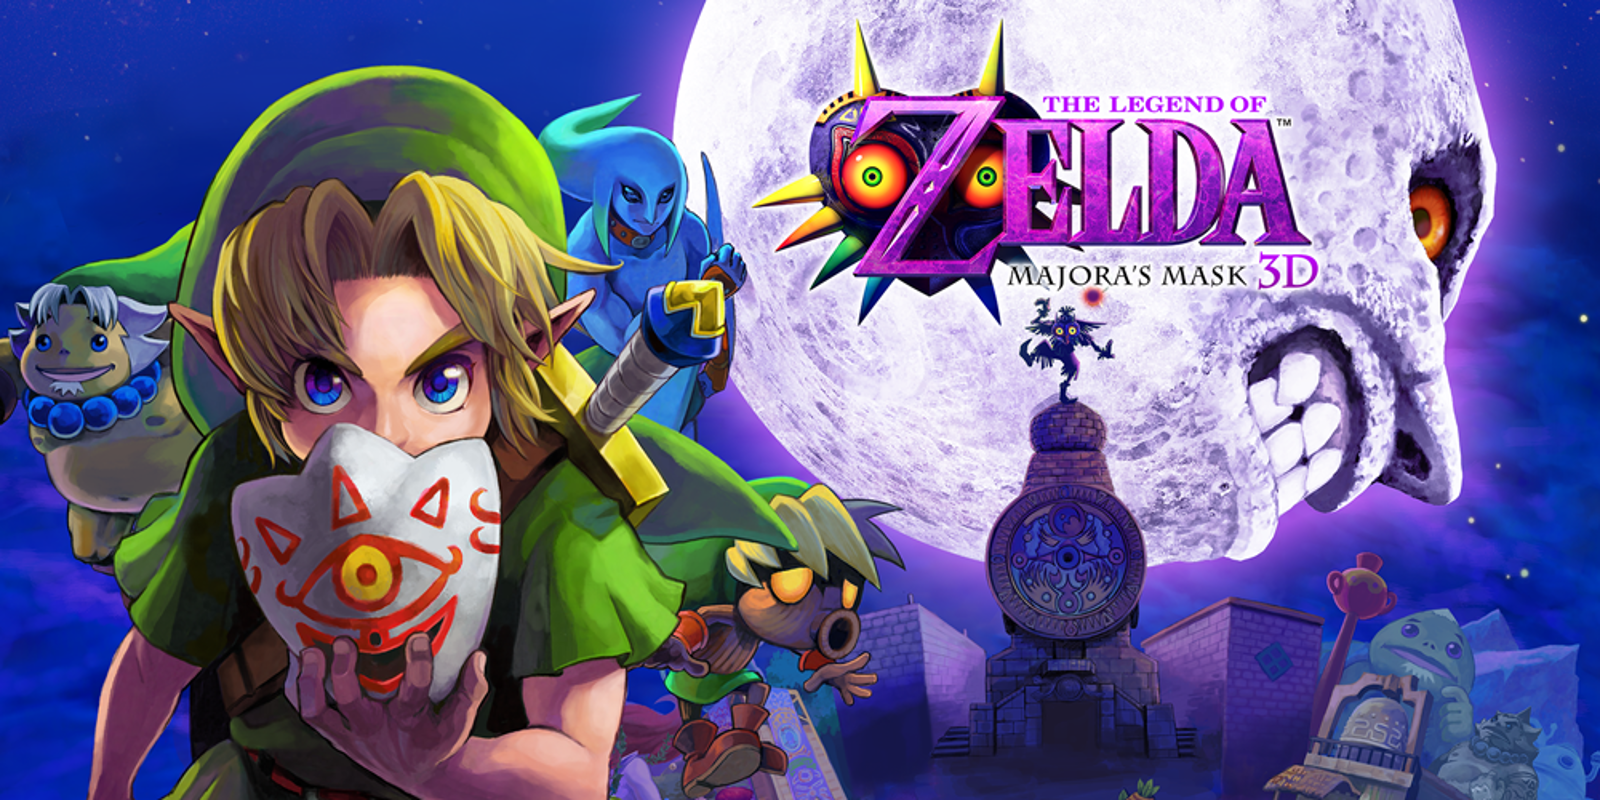 The Legend of Zelda: Majora's Mask. Nintendo